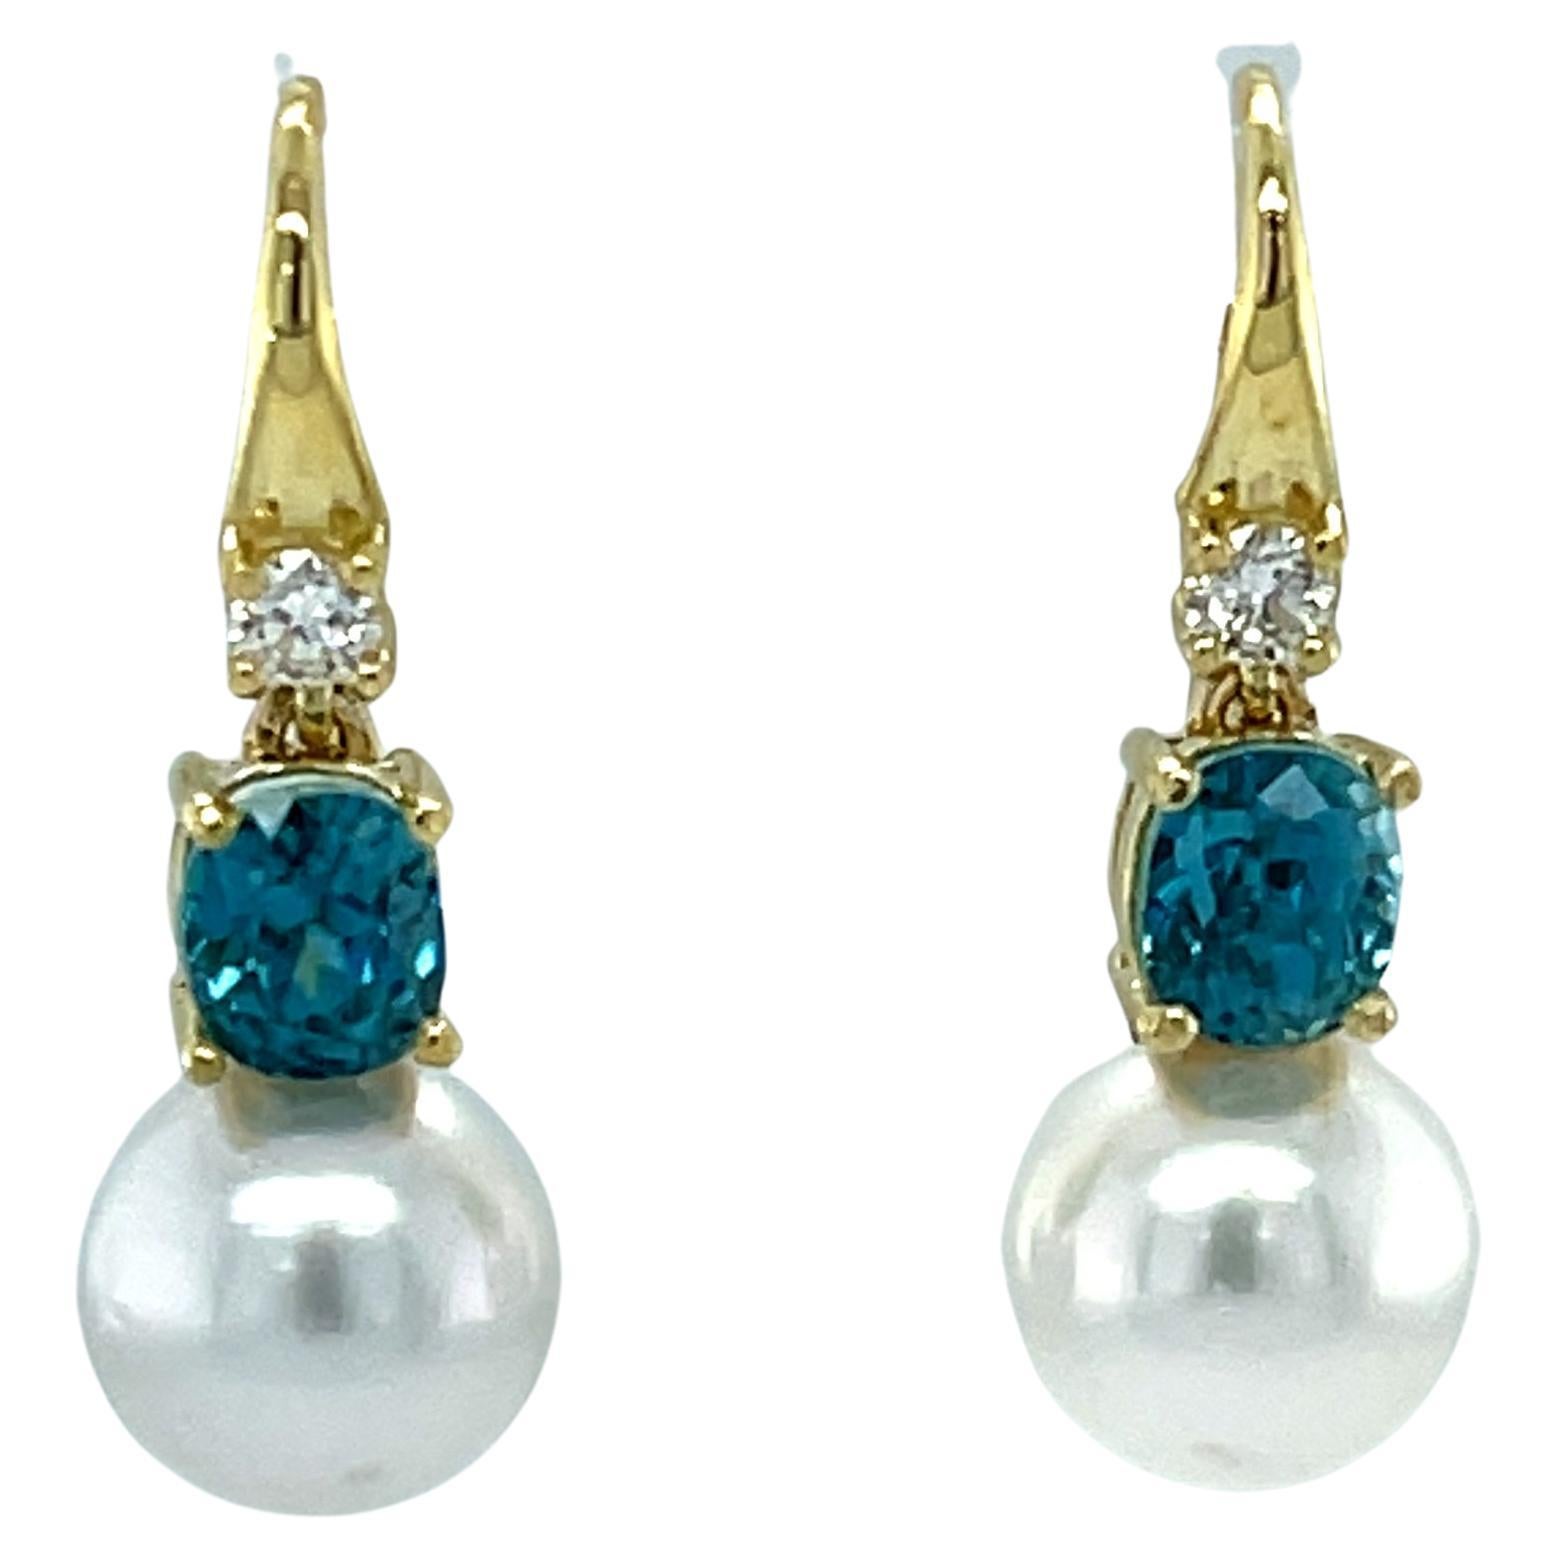 9mm South Sea Pearl, Blue Zircon and Diamond Drop Earrings in 18k Yellow Gold